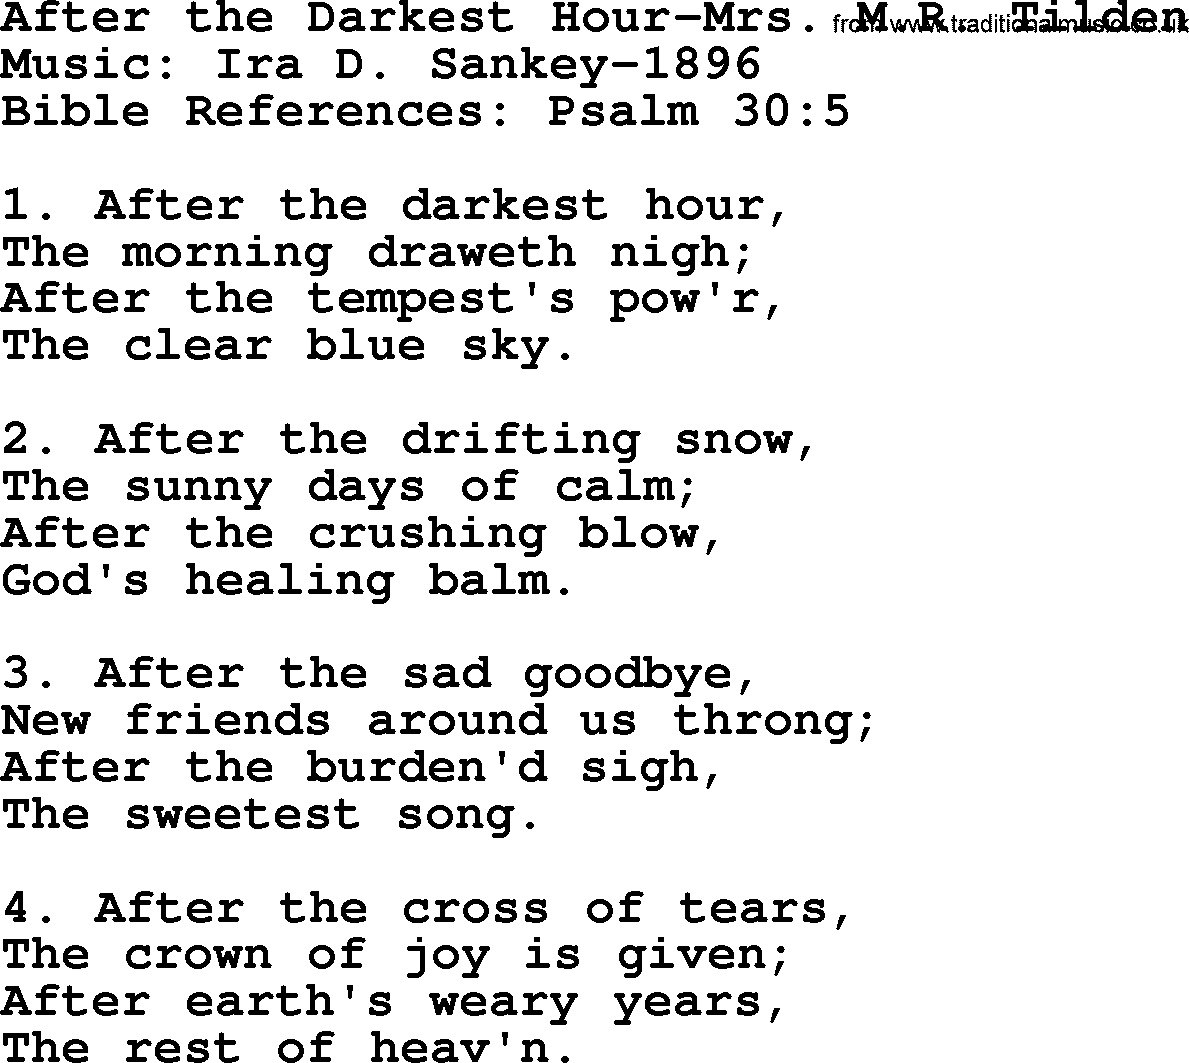 Ira Sankey hymn: After the Darkest Hour-Ira Sankey, lyrics